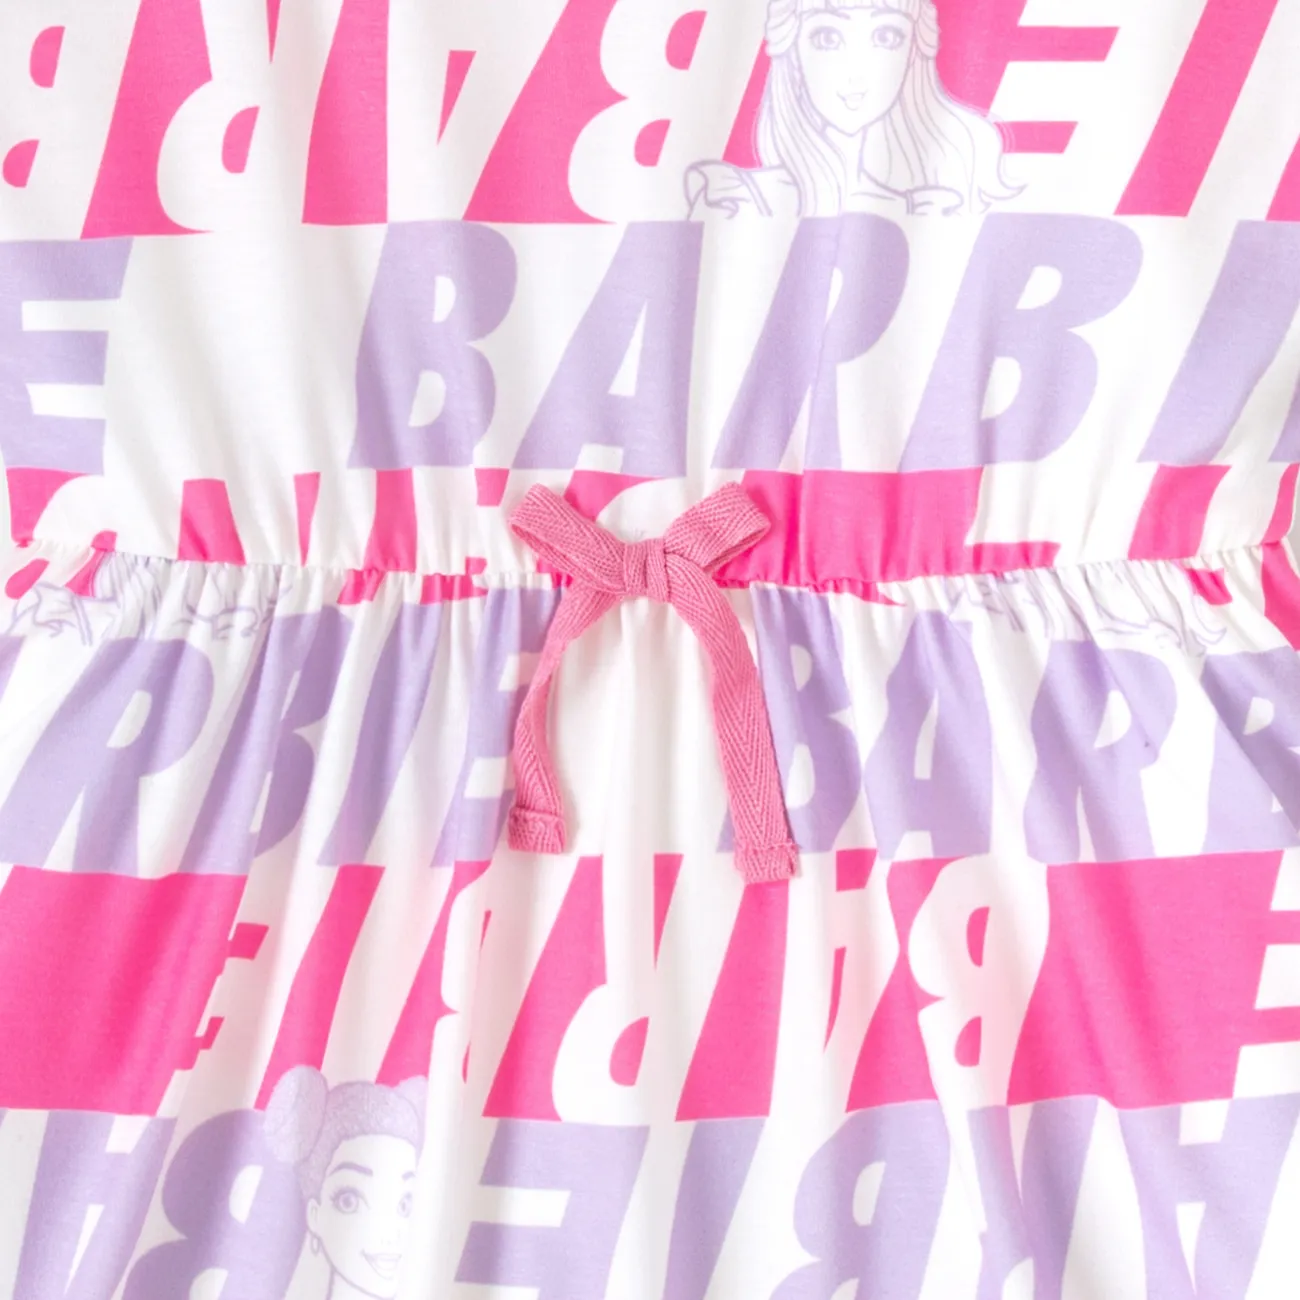 Barbie IP Ragazza Infantile Vestiti pinkywhite big image 1